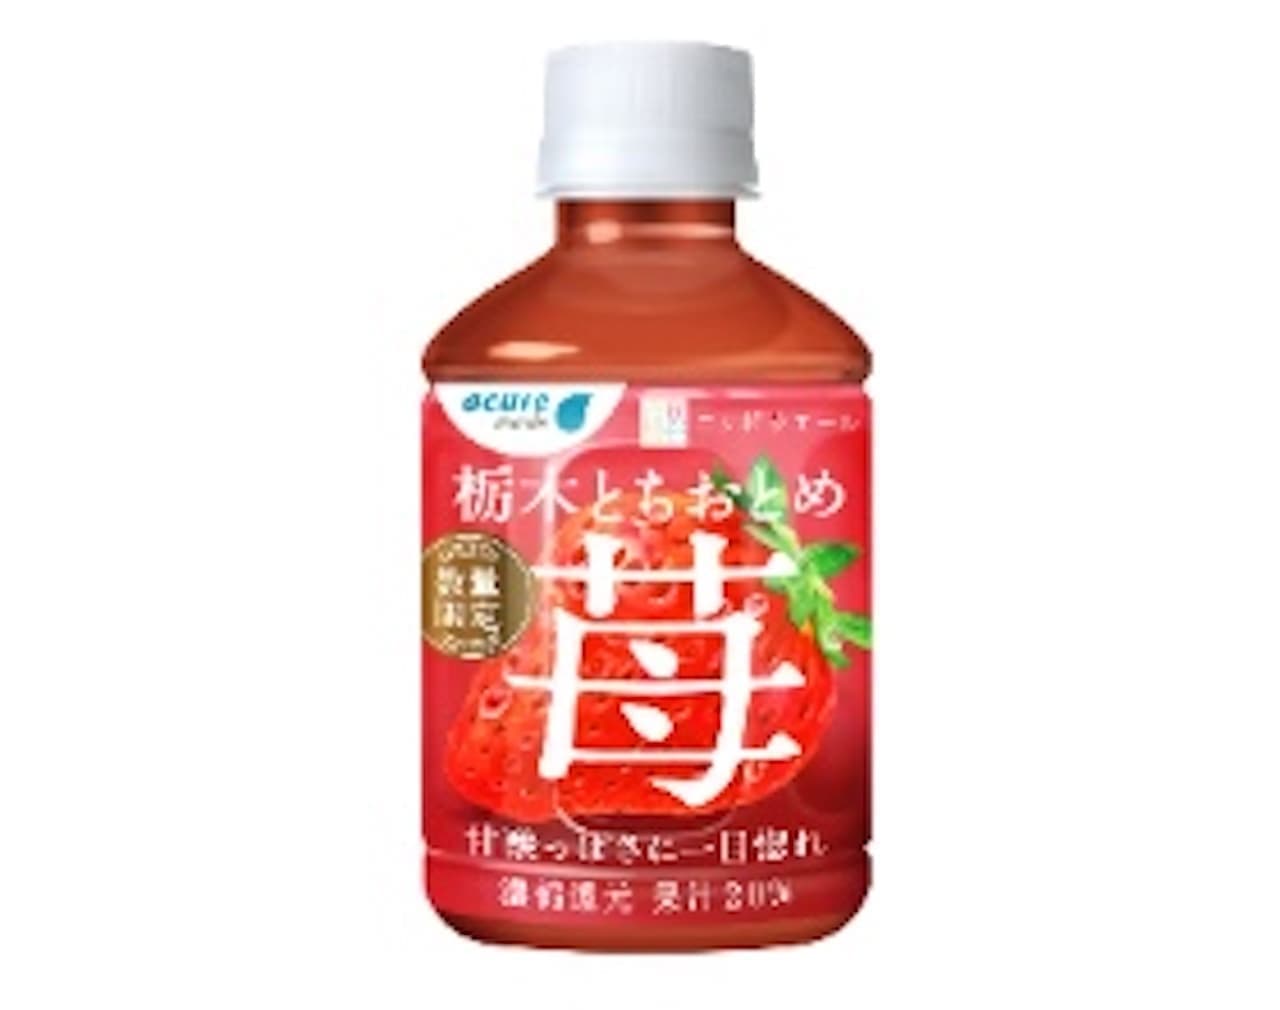 Acure Maid Nippon Ale "Tochigi Tochiotome Strawberry